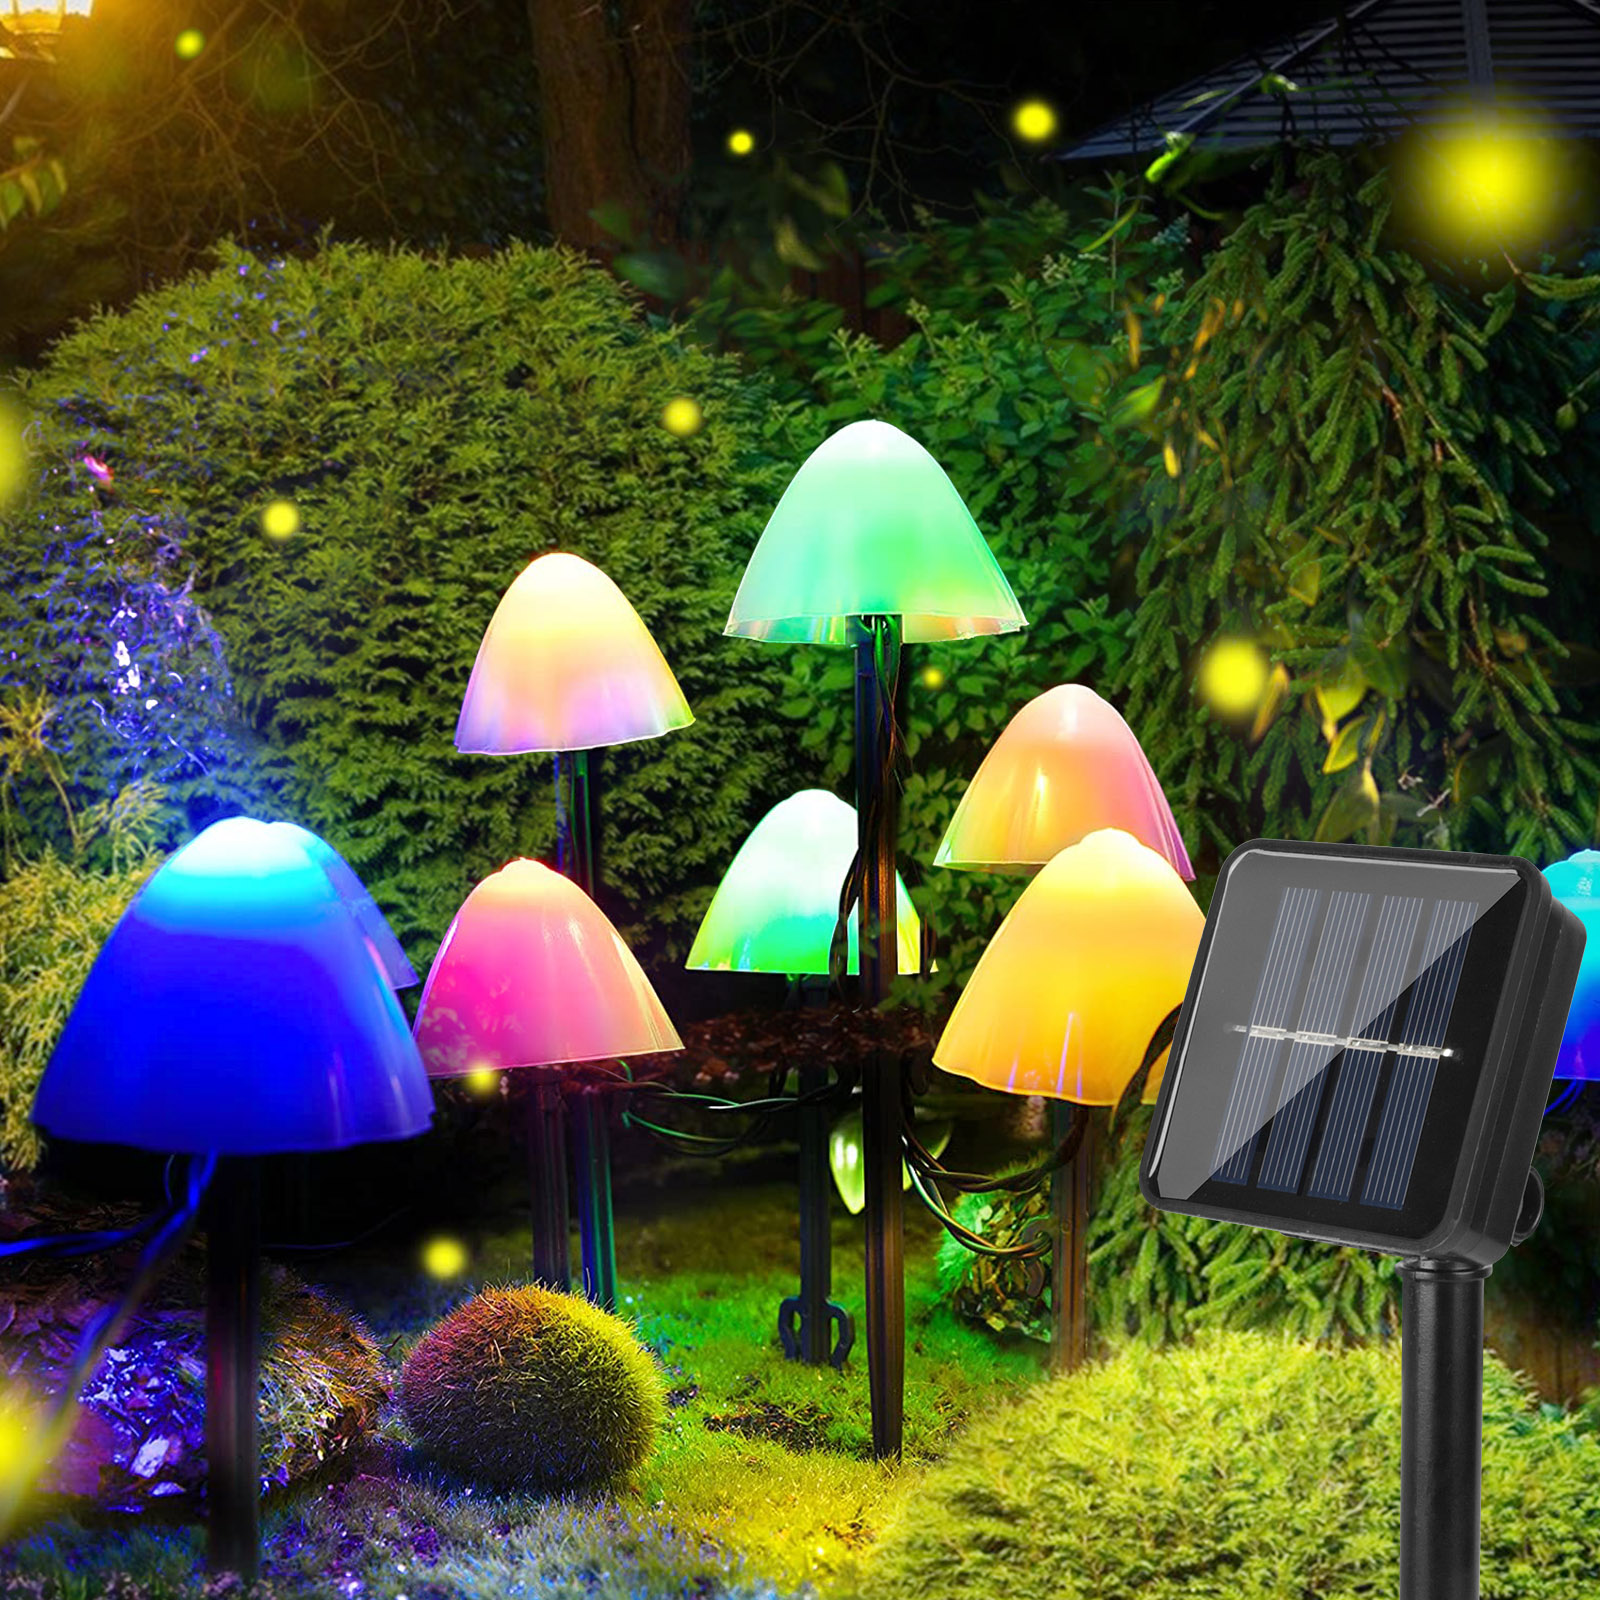 Details about   Mushroom Fairy LED Outdoor Solar Flower Landscape String Garden Lights Decor US